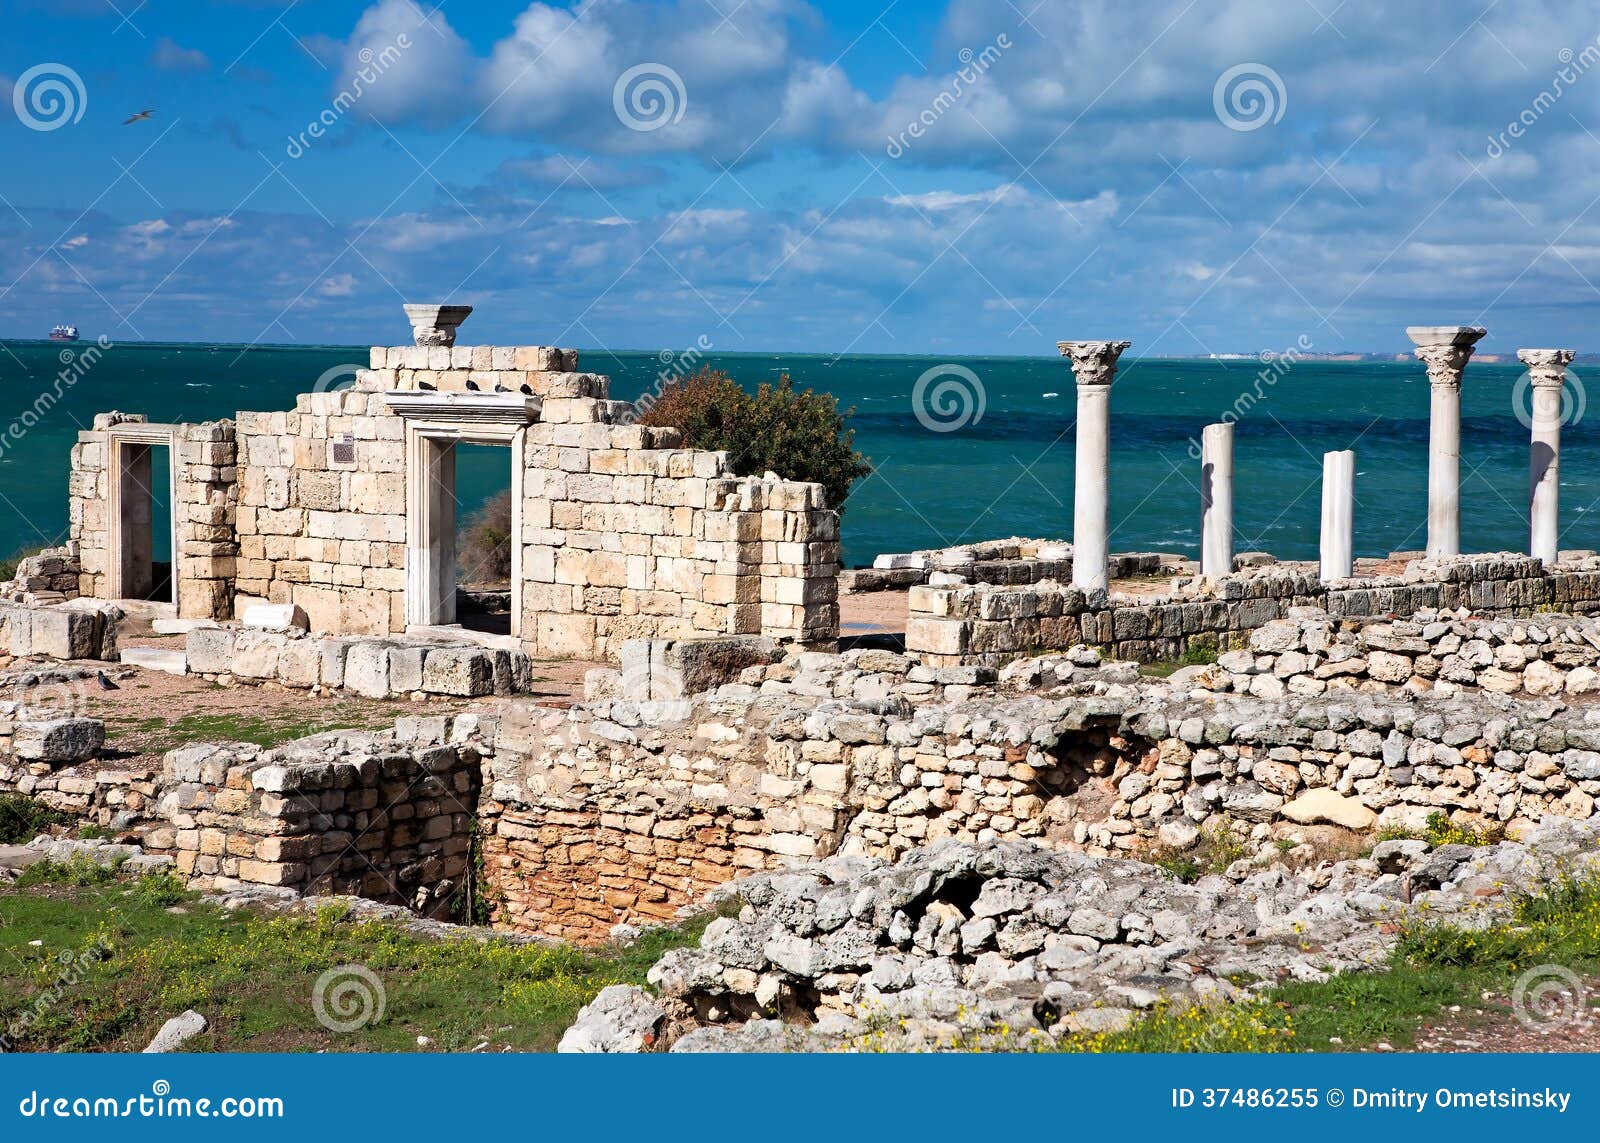 ancient greek basilica in chersonesus in crimea